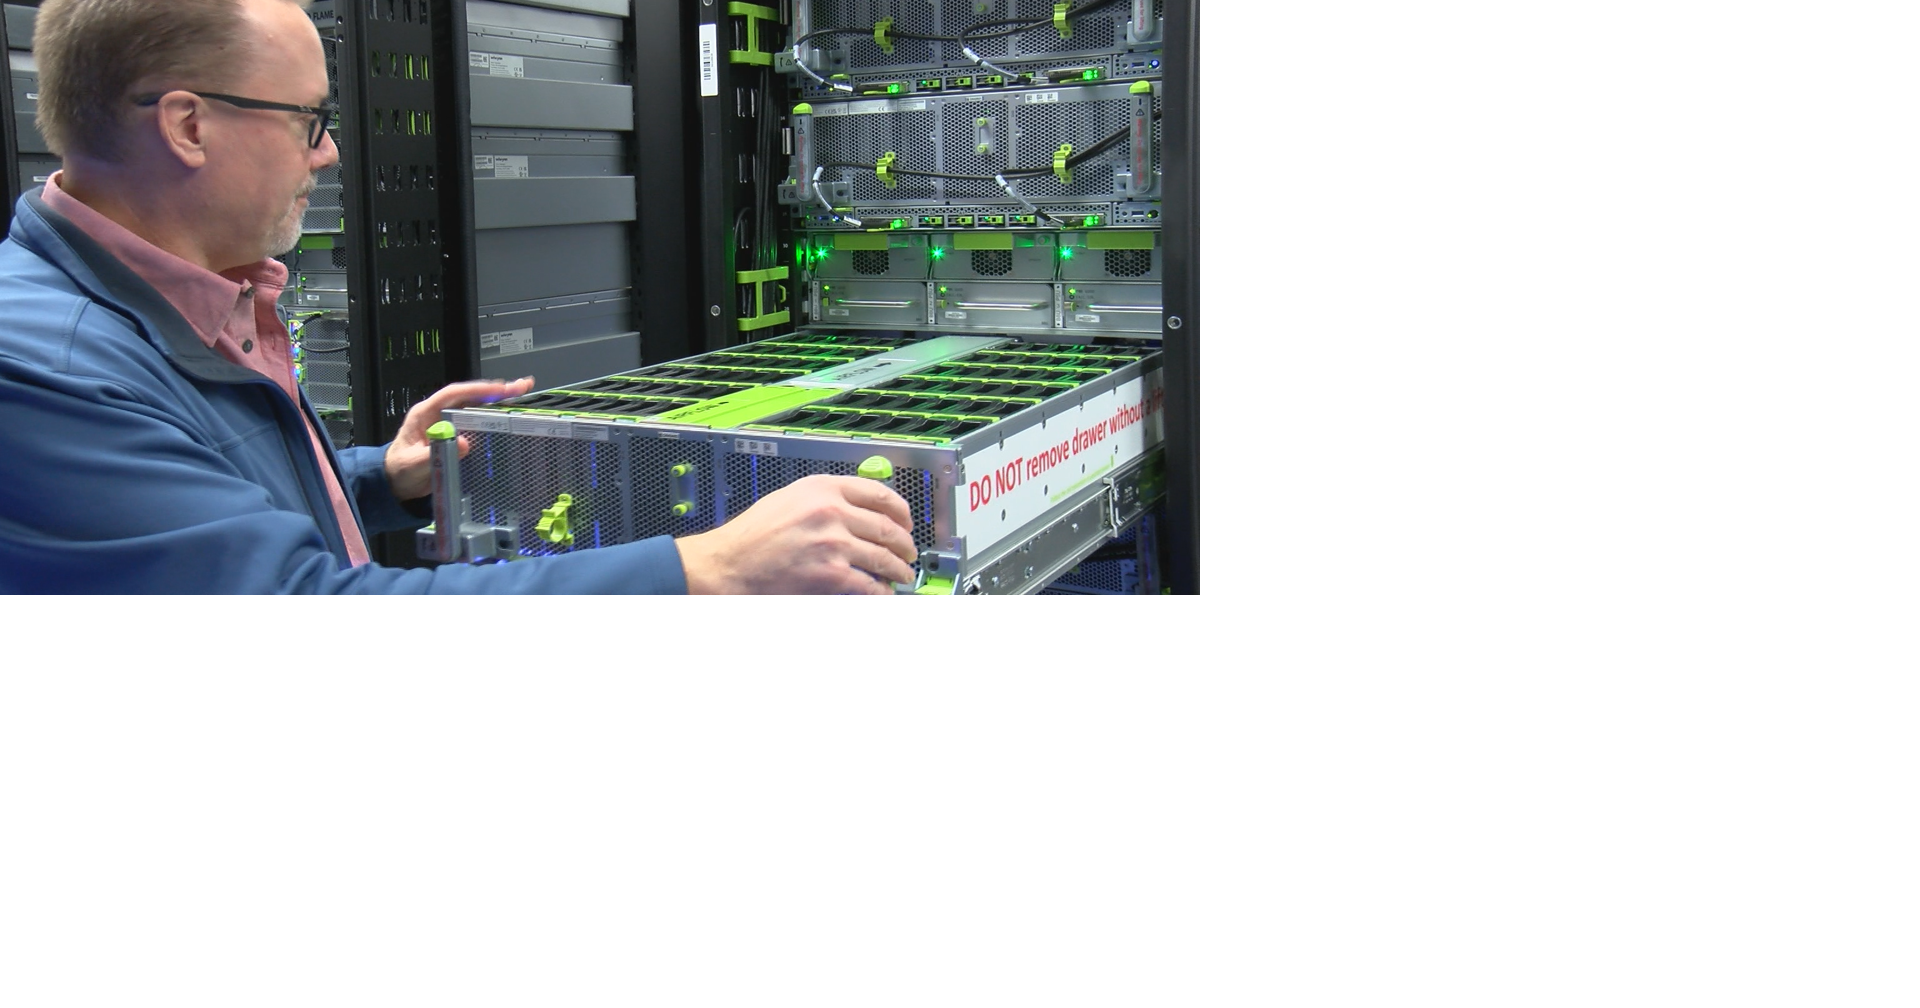 New Meta data center in DeKalb brings jobs and cutting edge technology | News